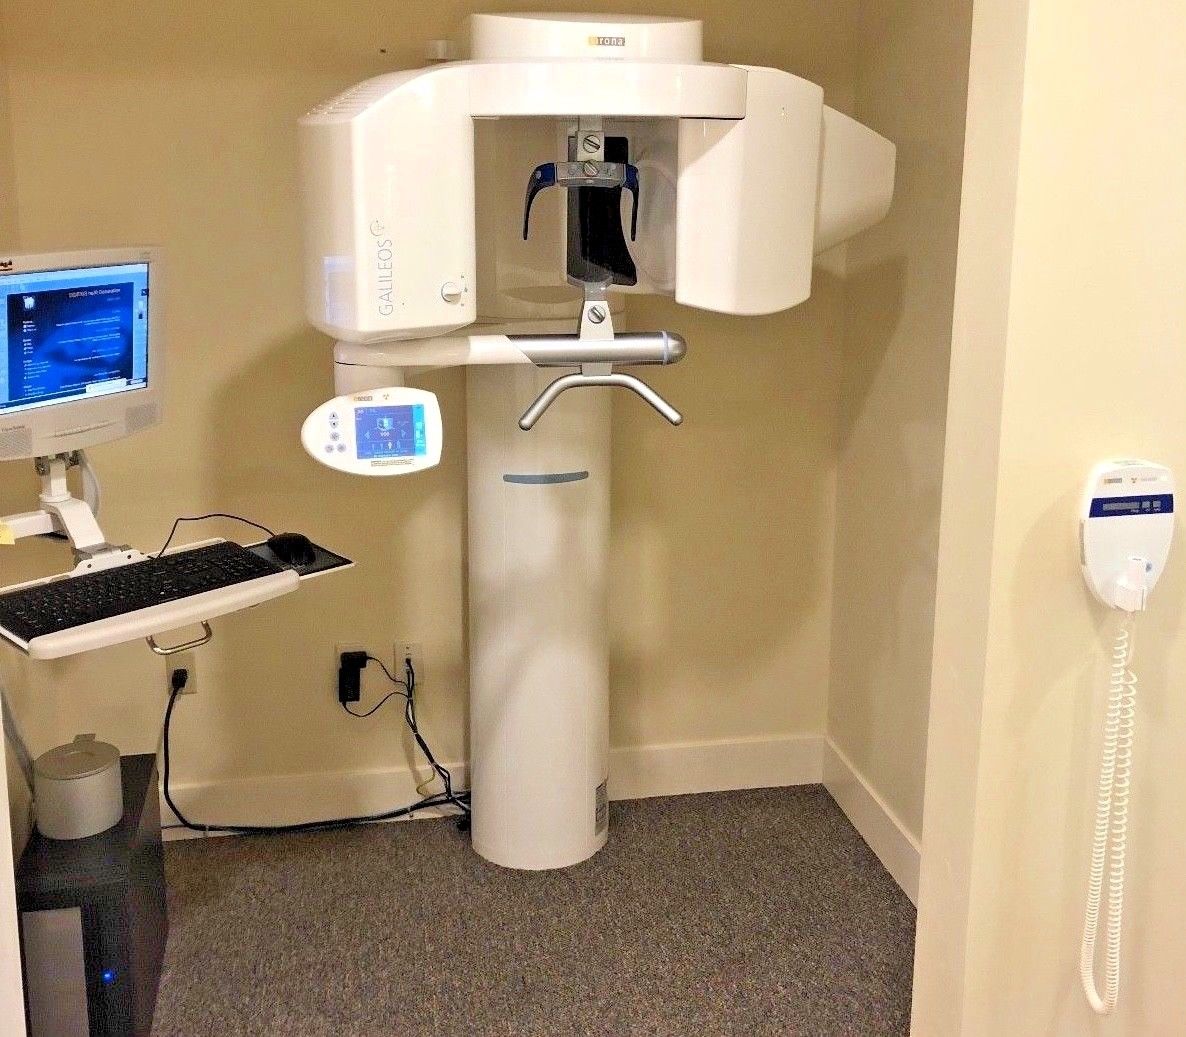 2014 Sirona Galileos Comfort Plus D3437 Dental Cone Beam CT Digital X-ray Imaging system.